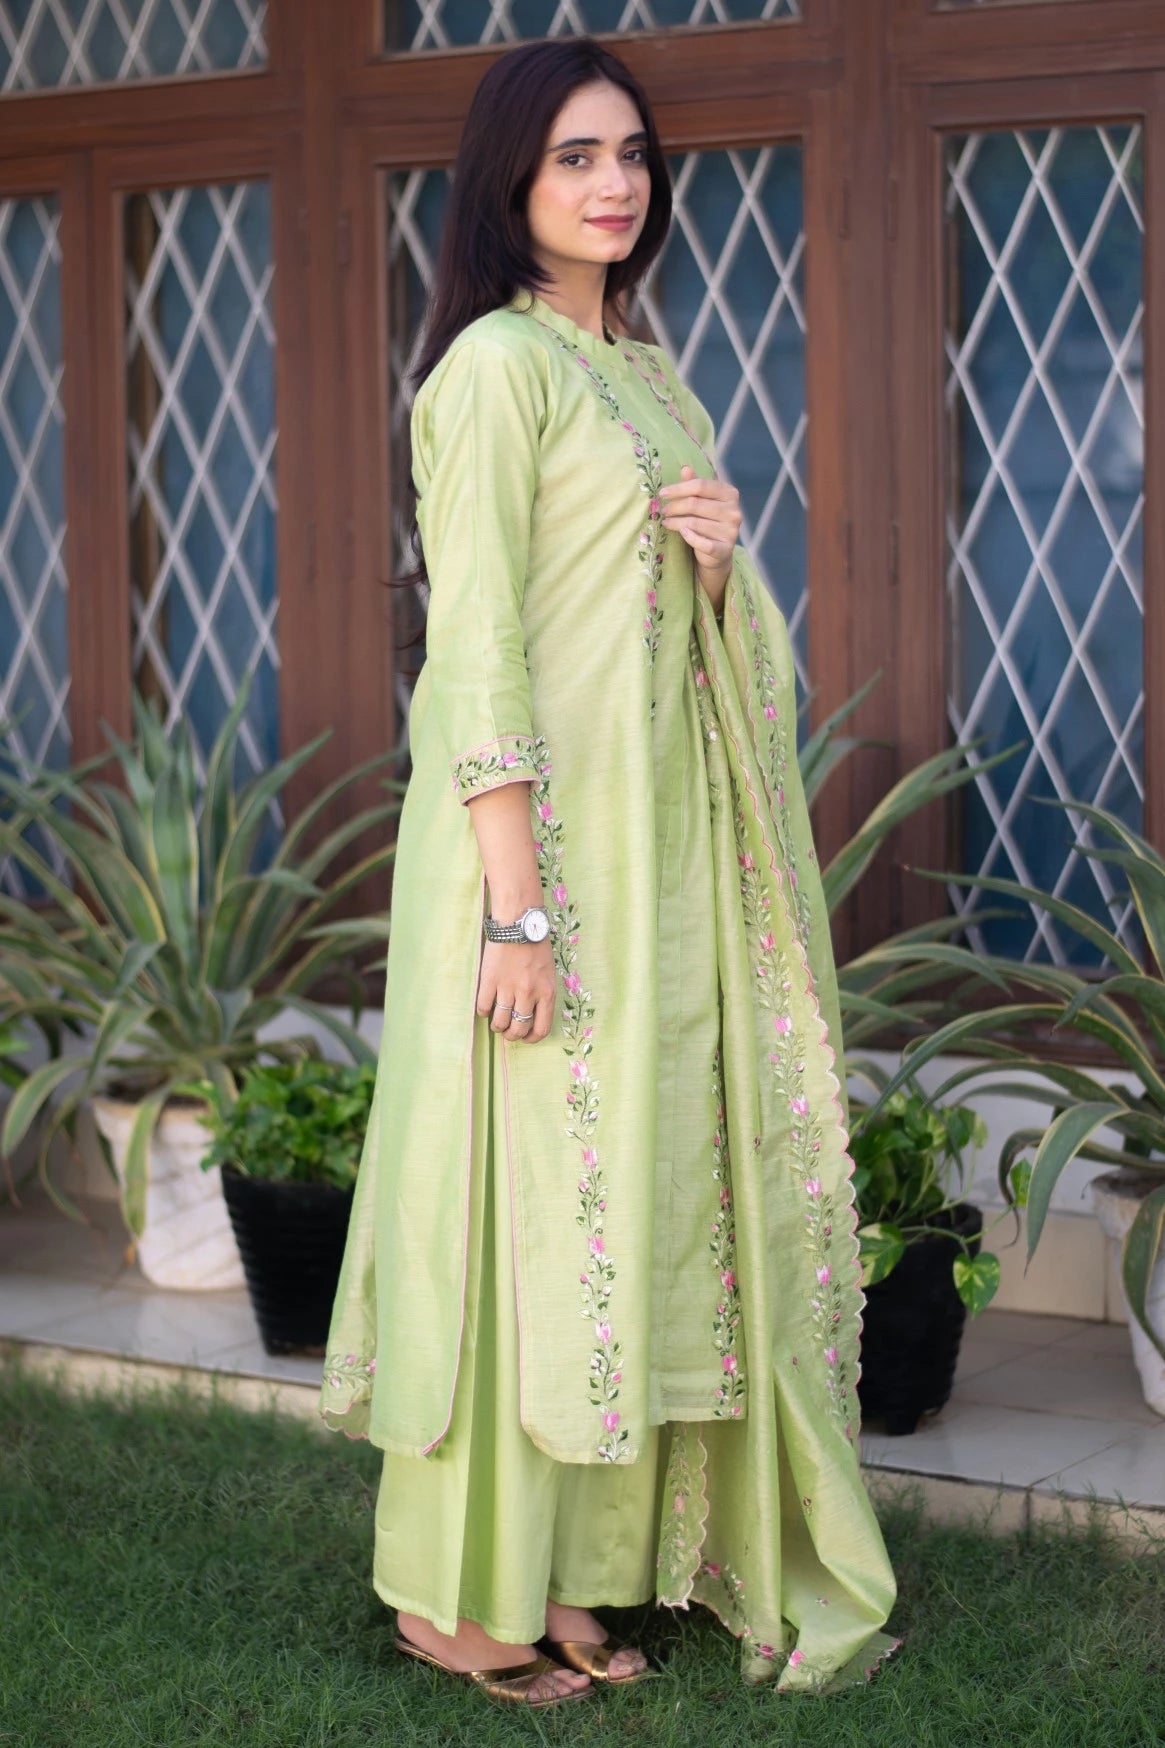 Indian women wearing embroidered kurta for ladies